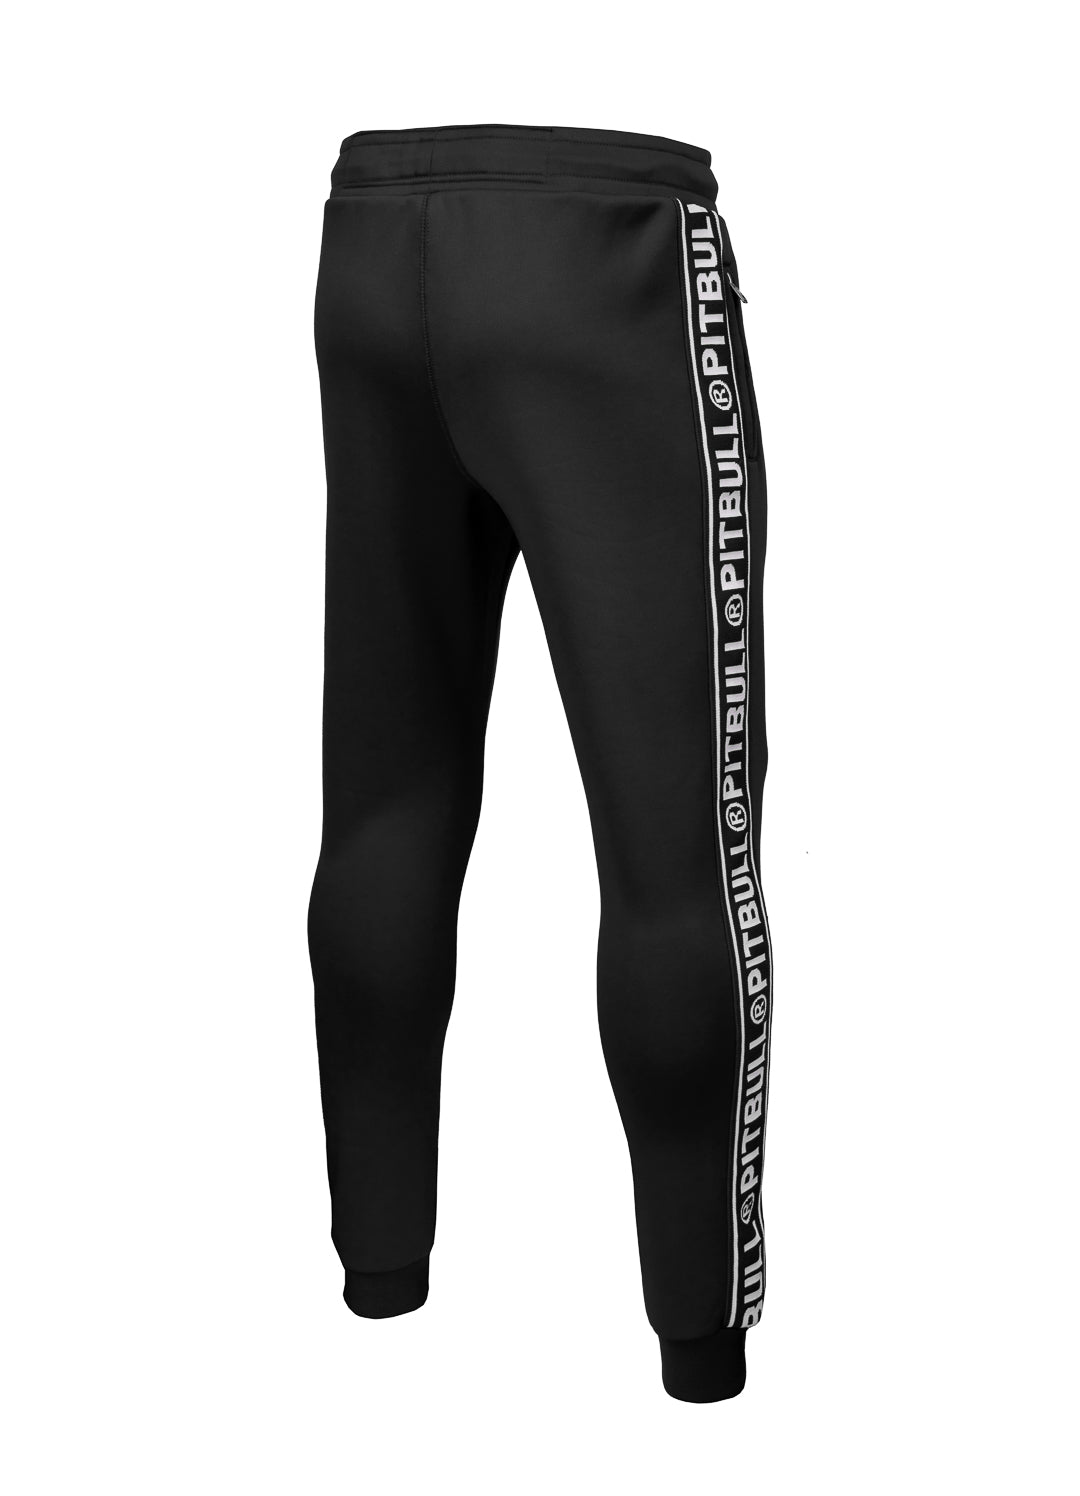 TAPE LOGO Black Track Pants - Pitbull West Coast International Store 